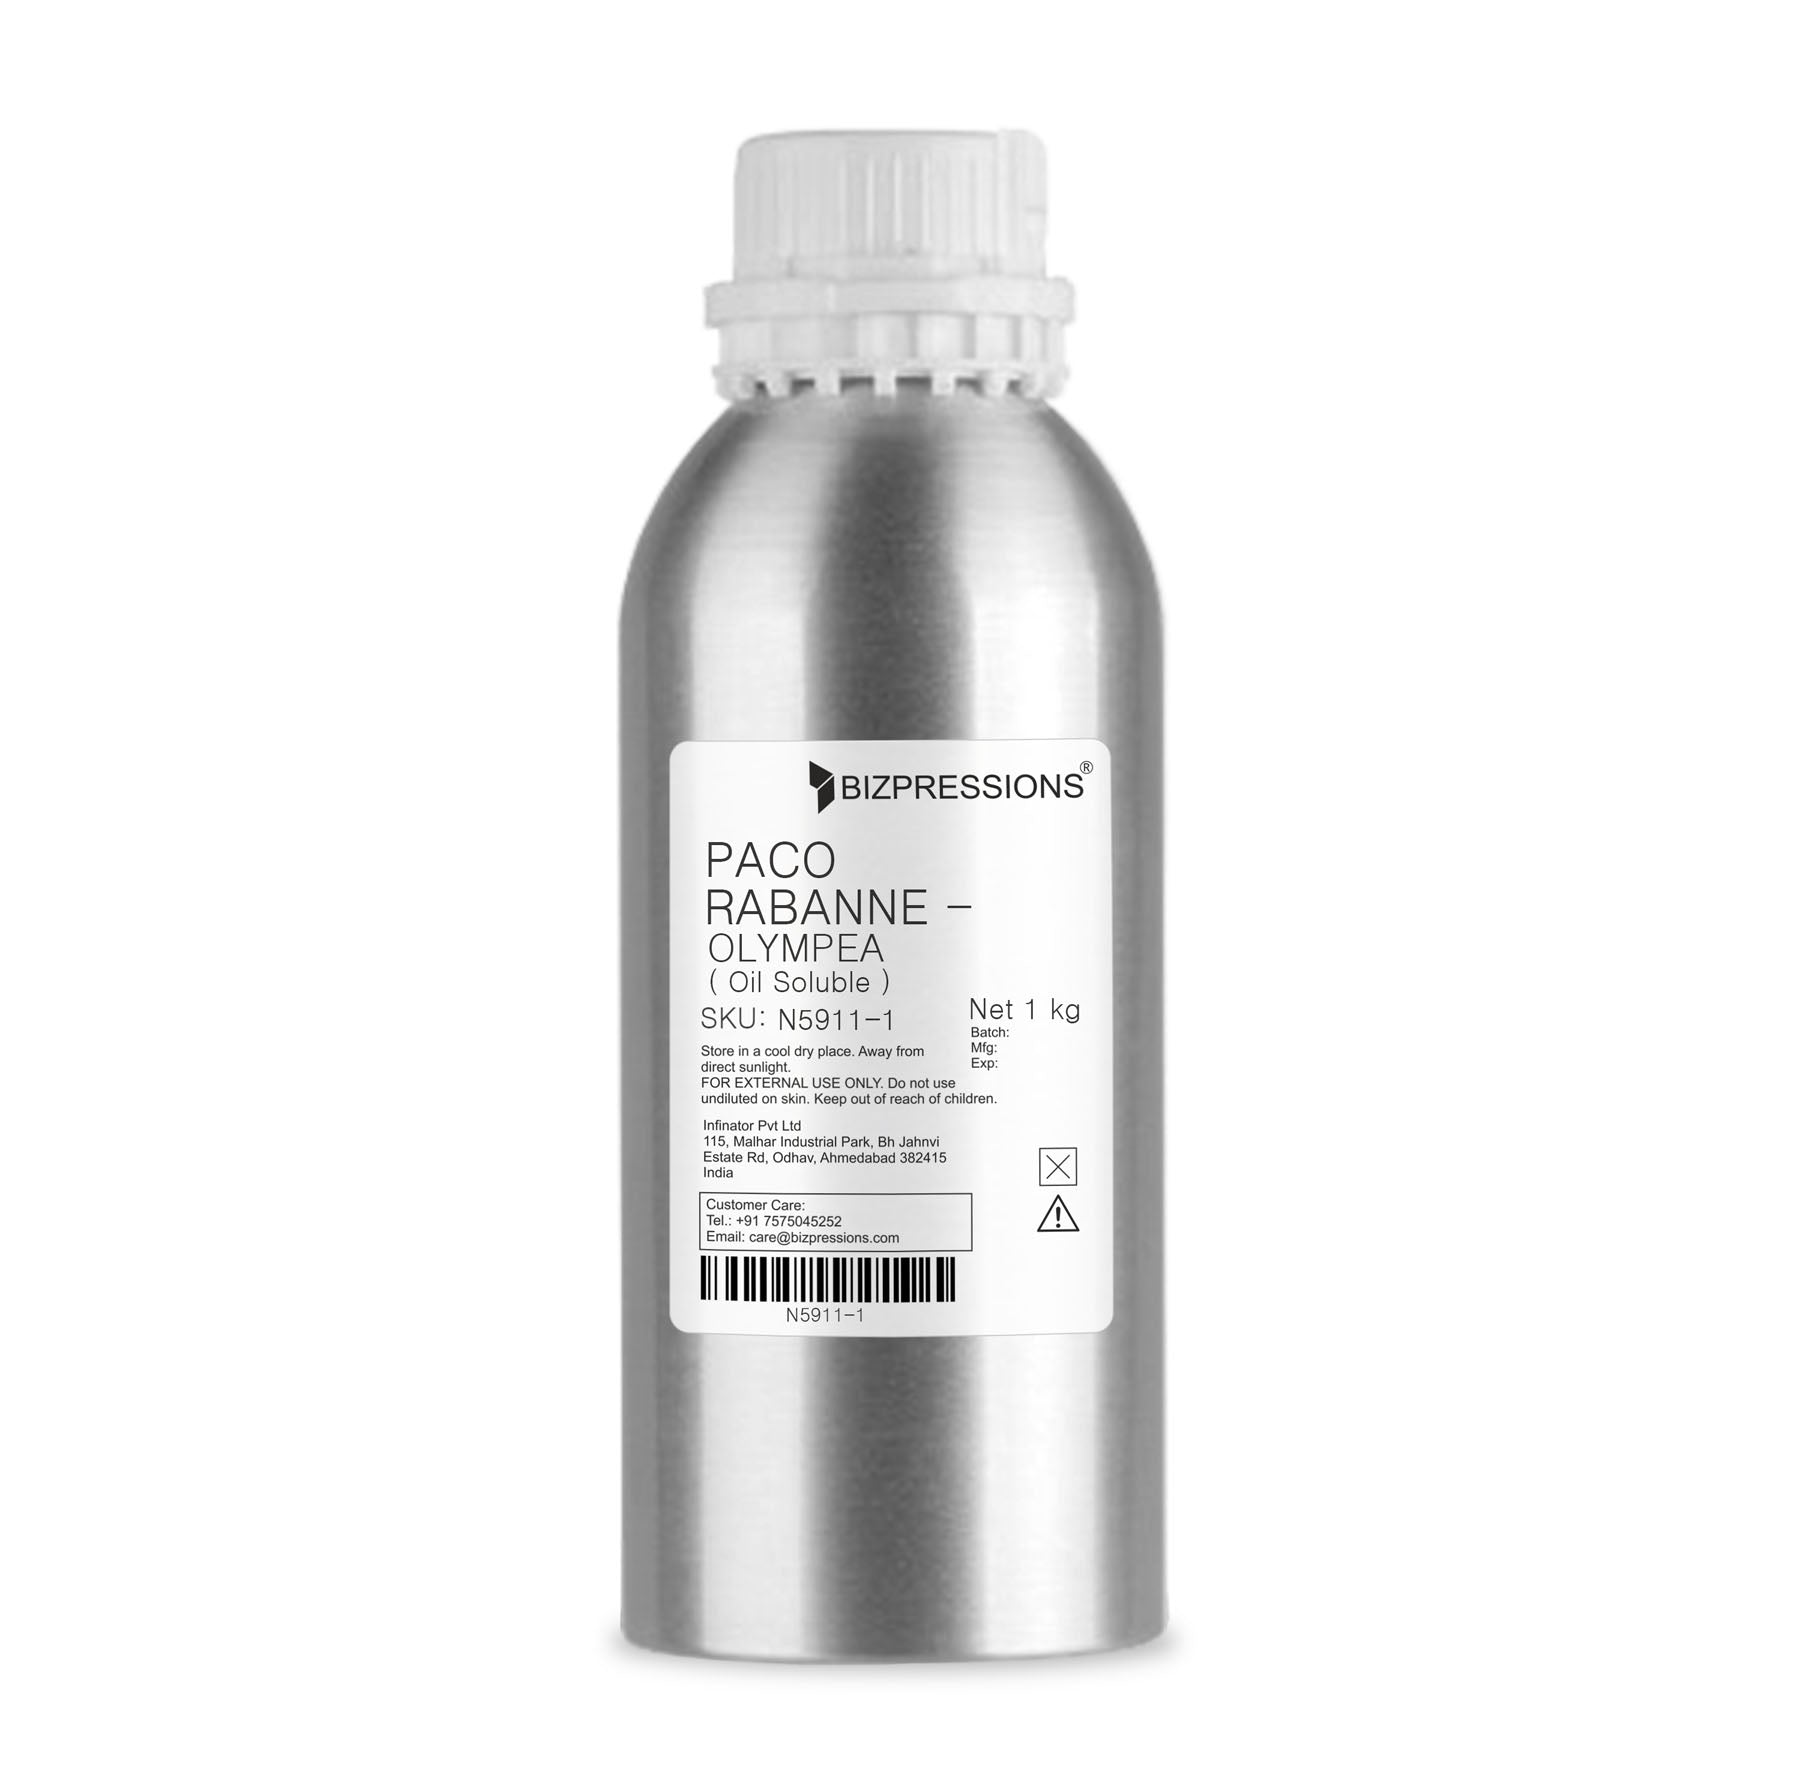 PACO RABANNE - OLYMPEA - Fragrance ( Oil Soluble ) - 1 kg